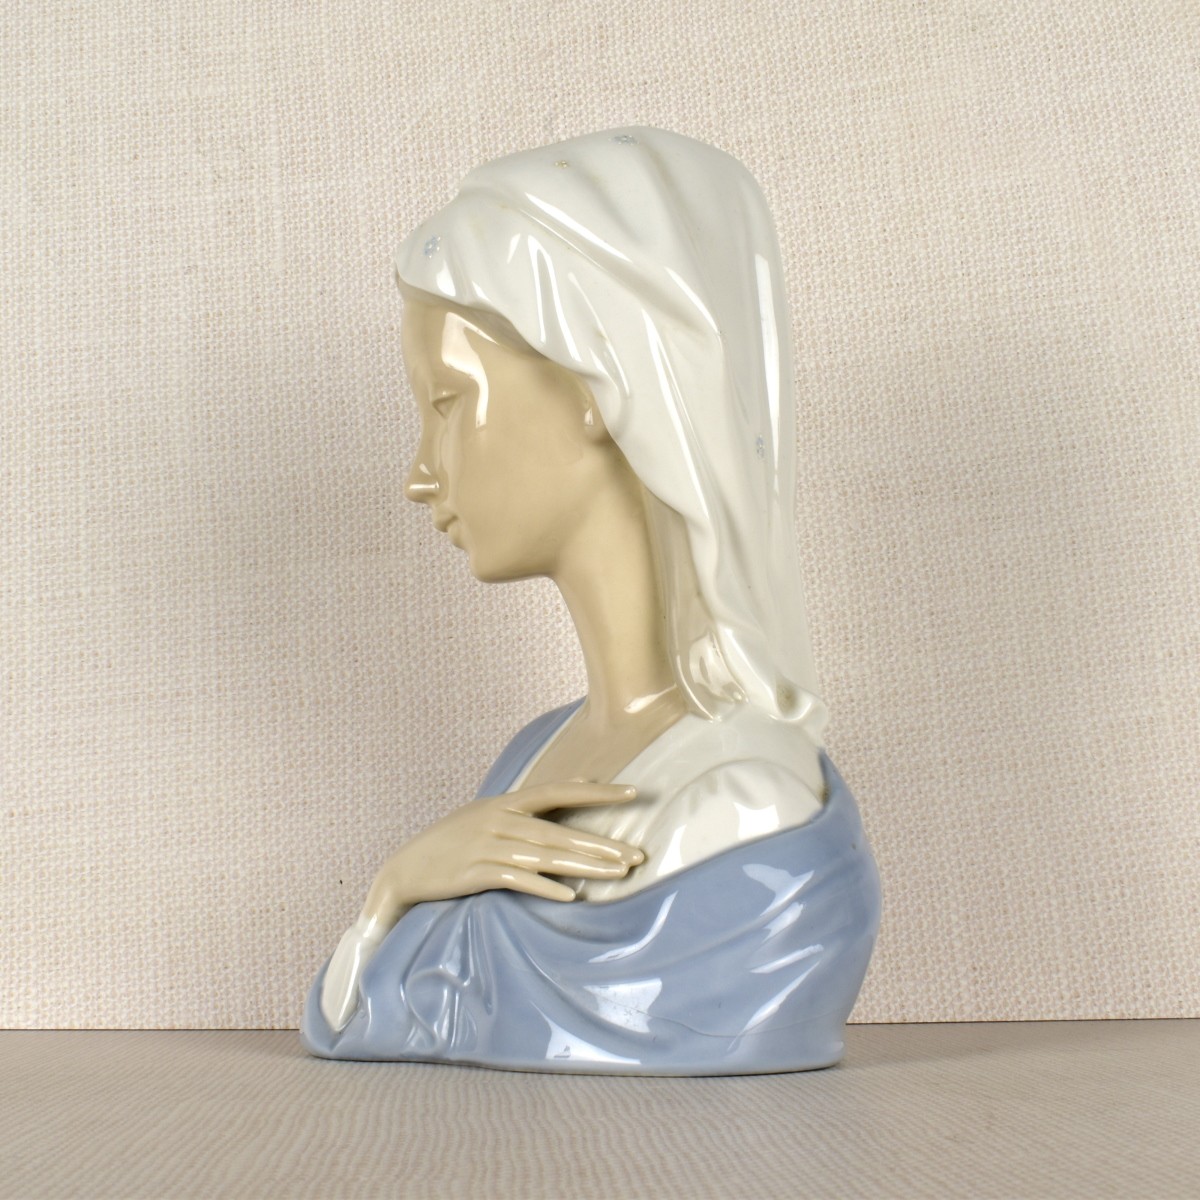 Lladro Figurine of a Lady Praying